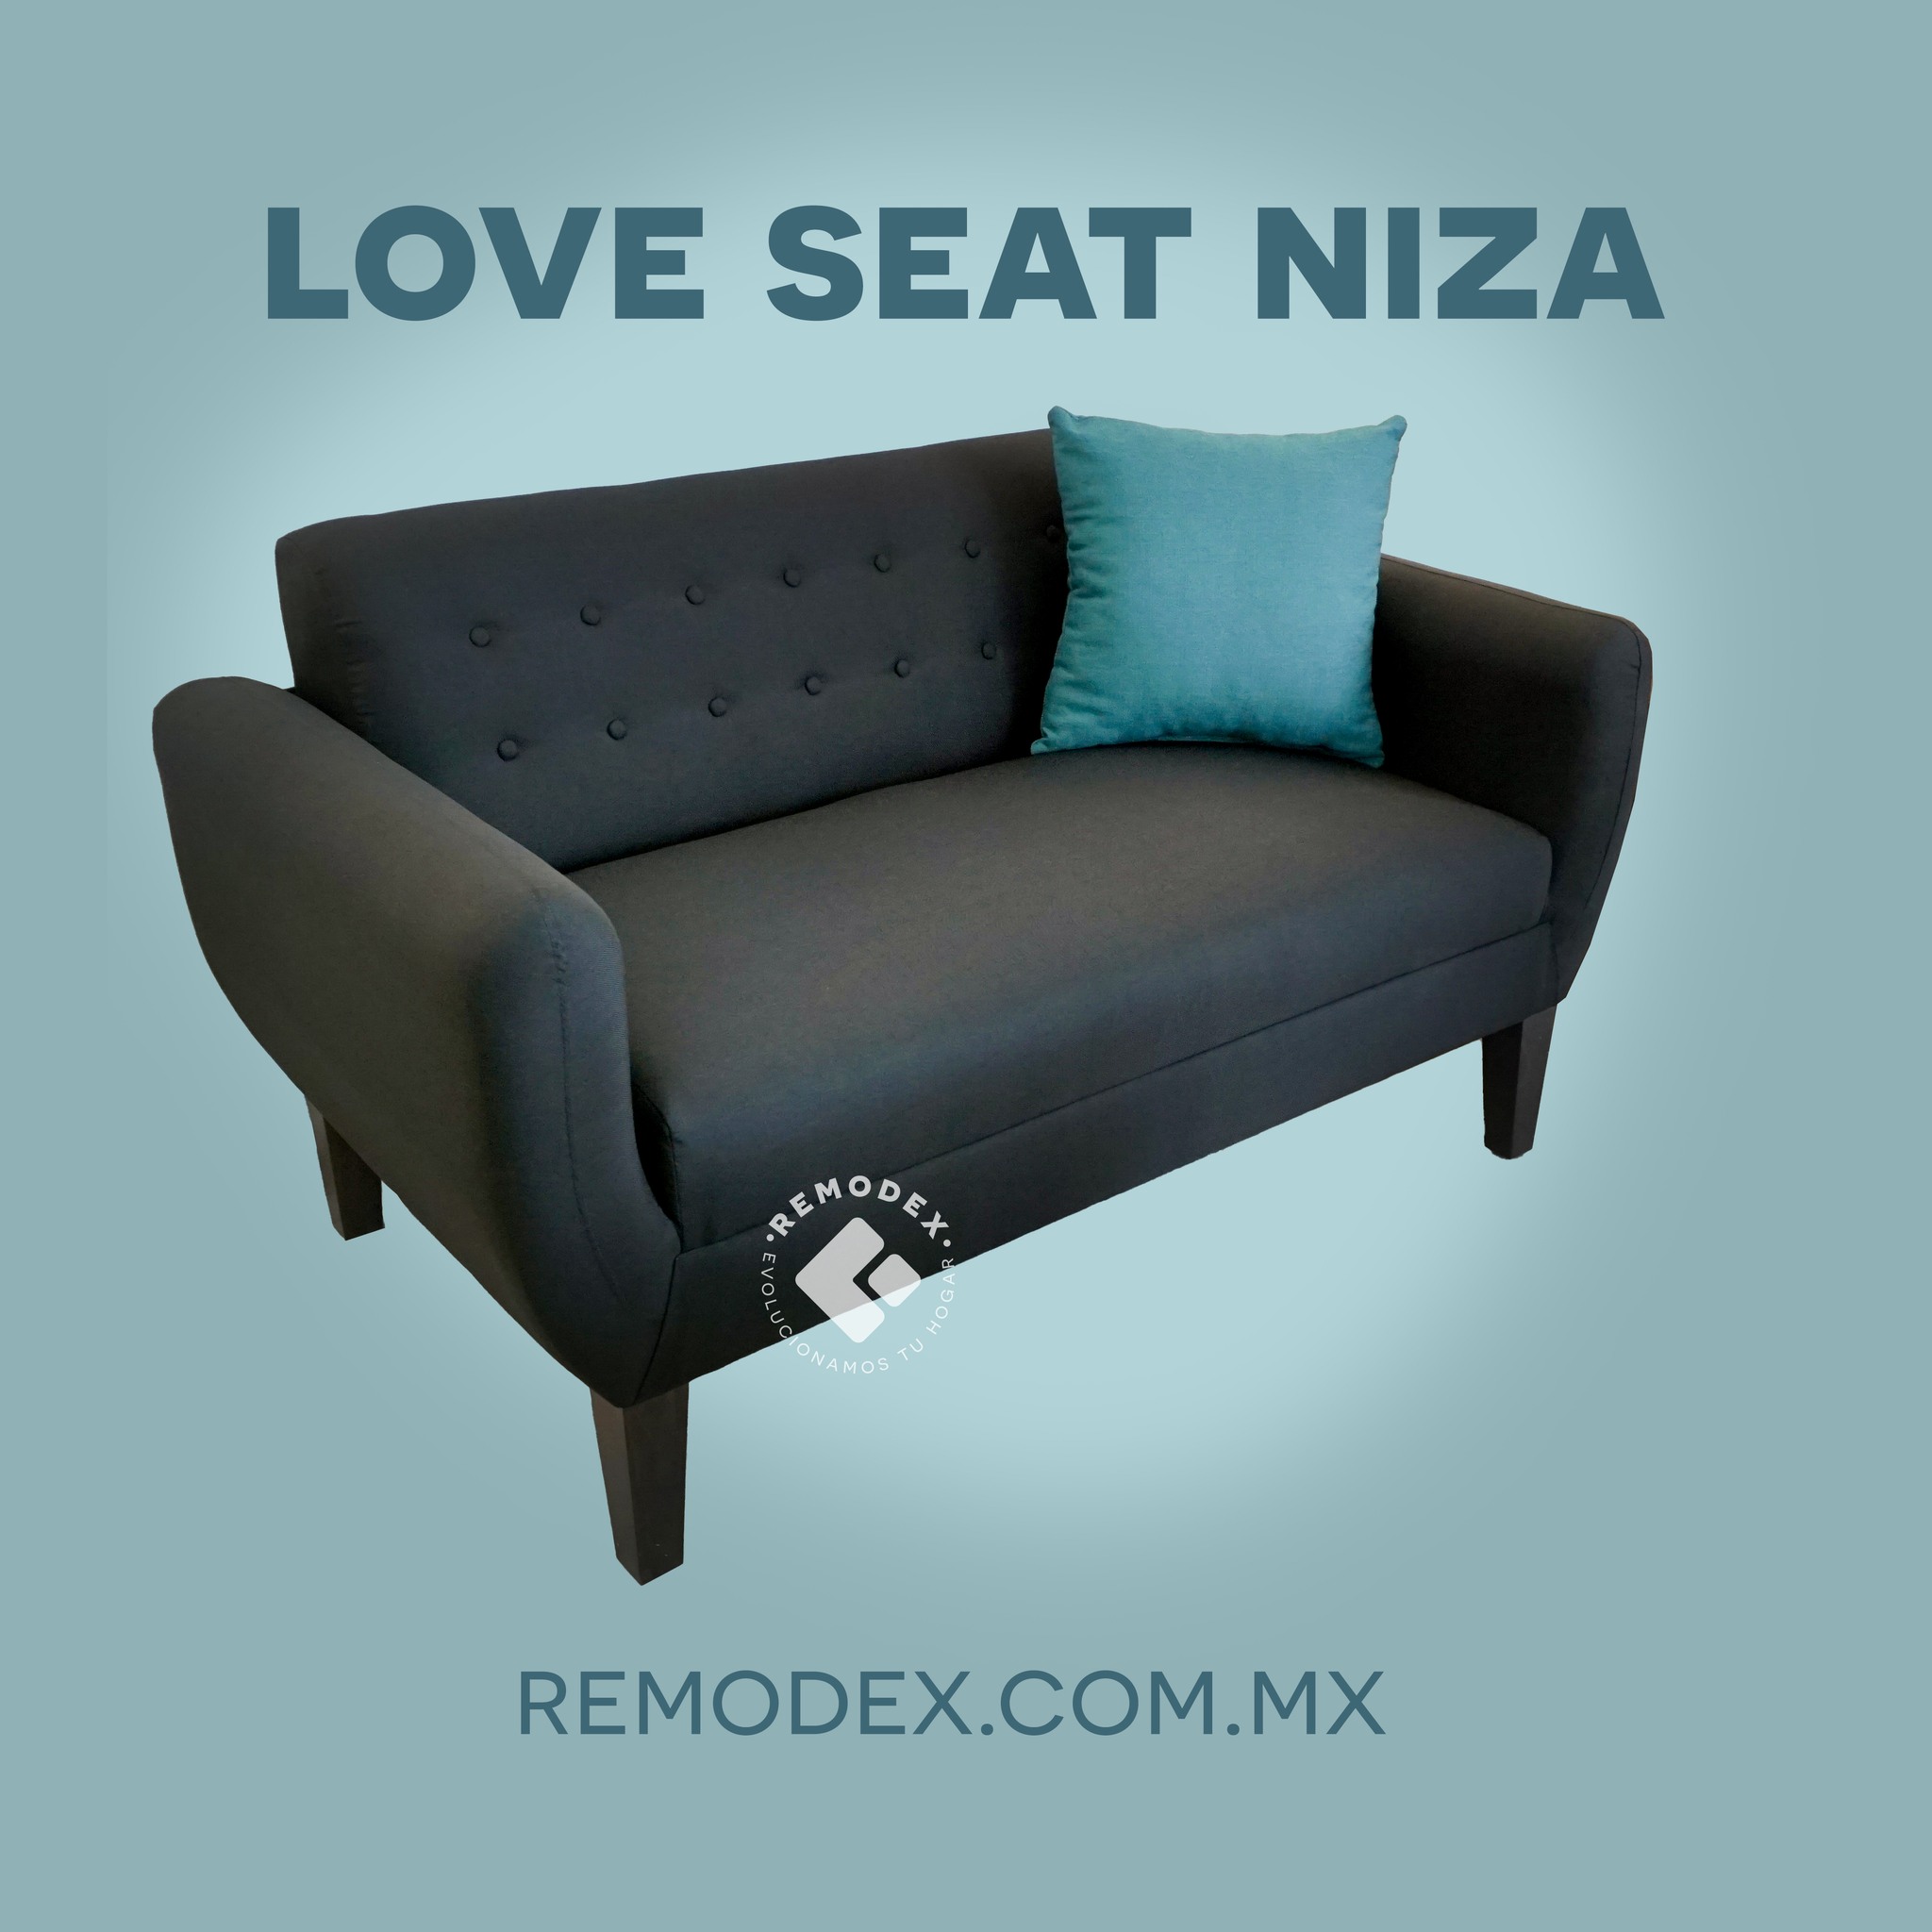 LOVE SEAT NIZA